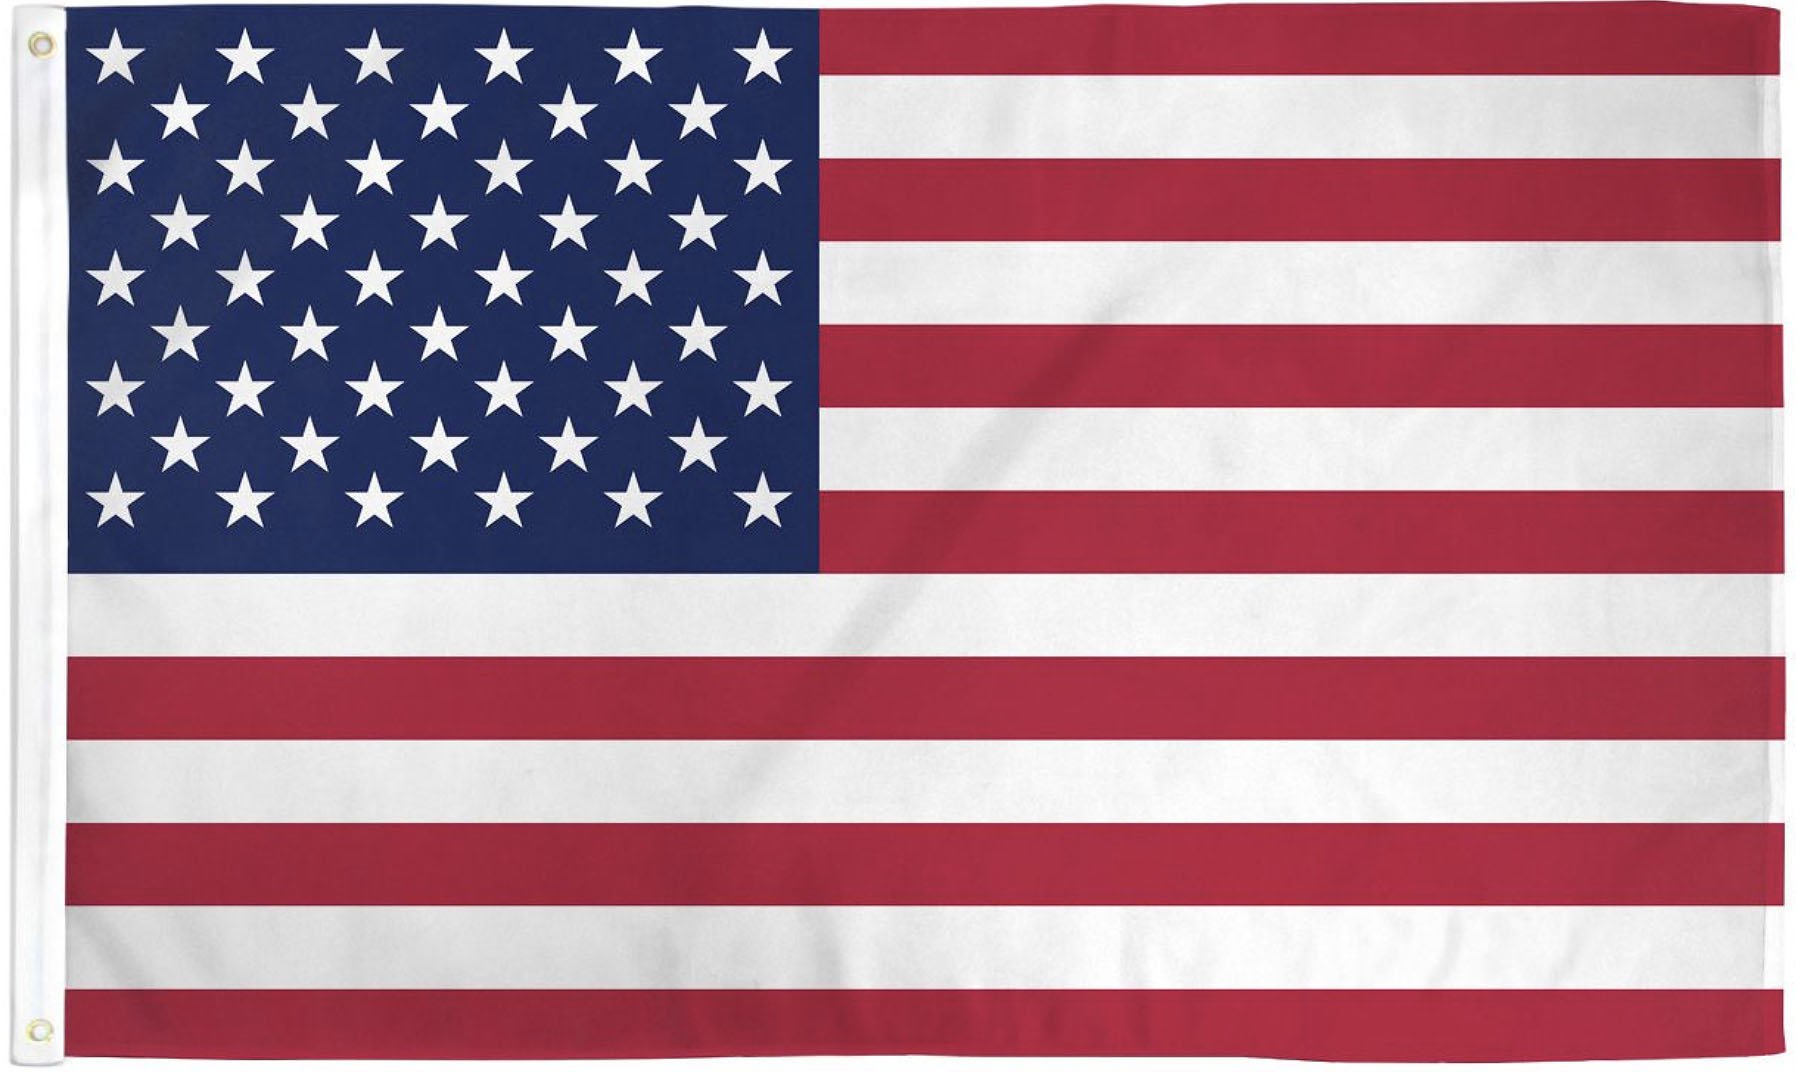 Usa official. США 1867 флаг. Флаг США В 1945 году. Флаг Америки 1941. Флаг США В 1865 году.